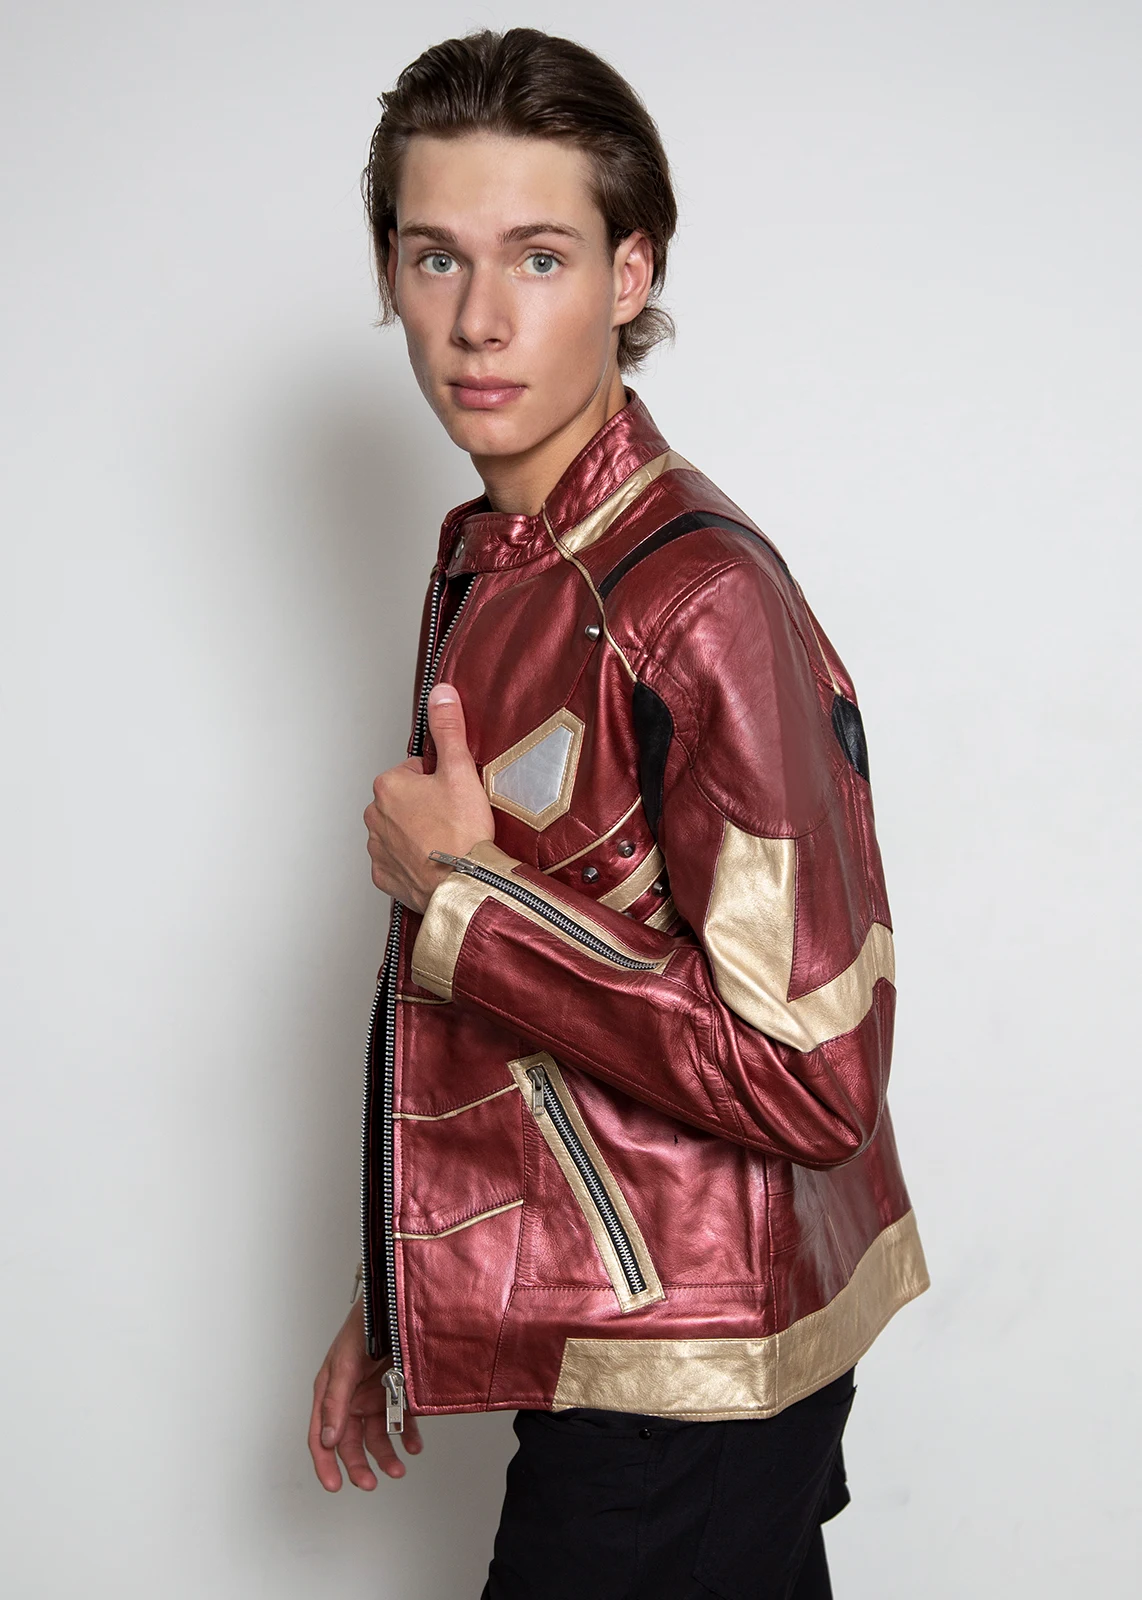 iron man tony stark red & gold armor leather jacket